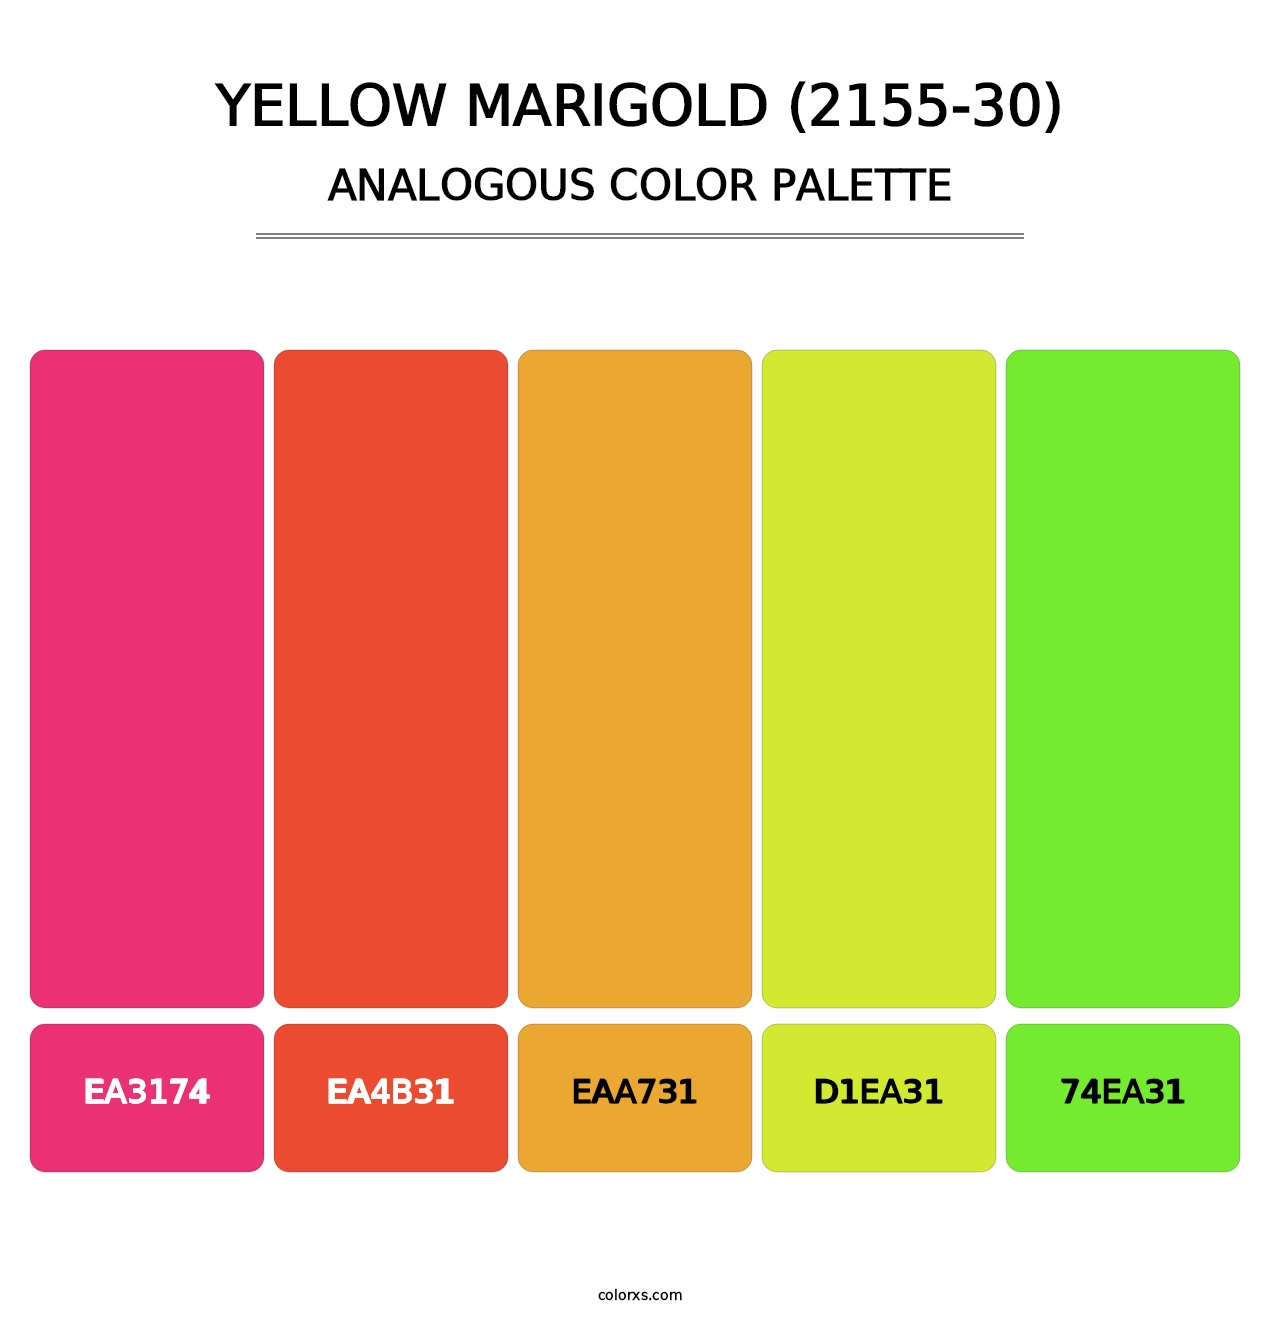 Yellow Marigold (2155-30) - Analogous Color Palette